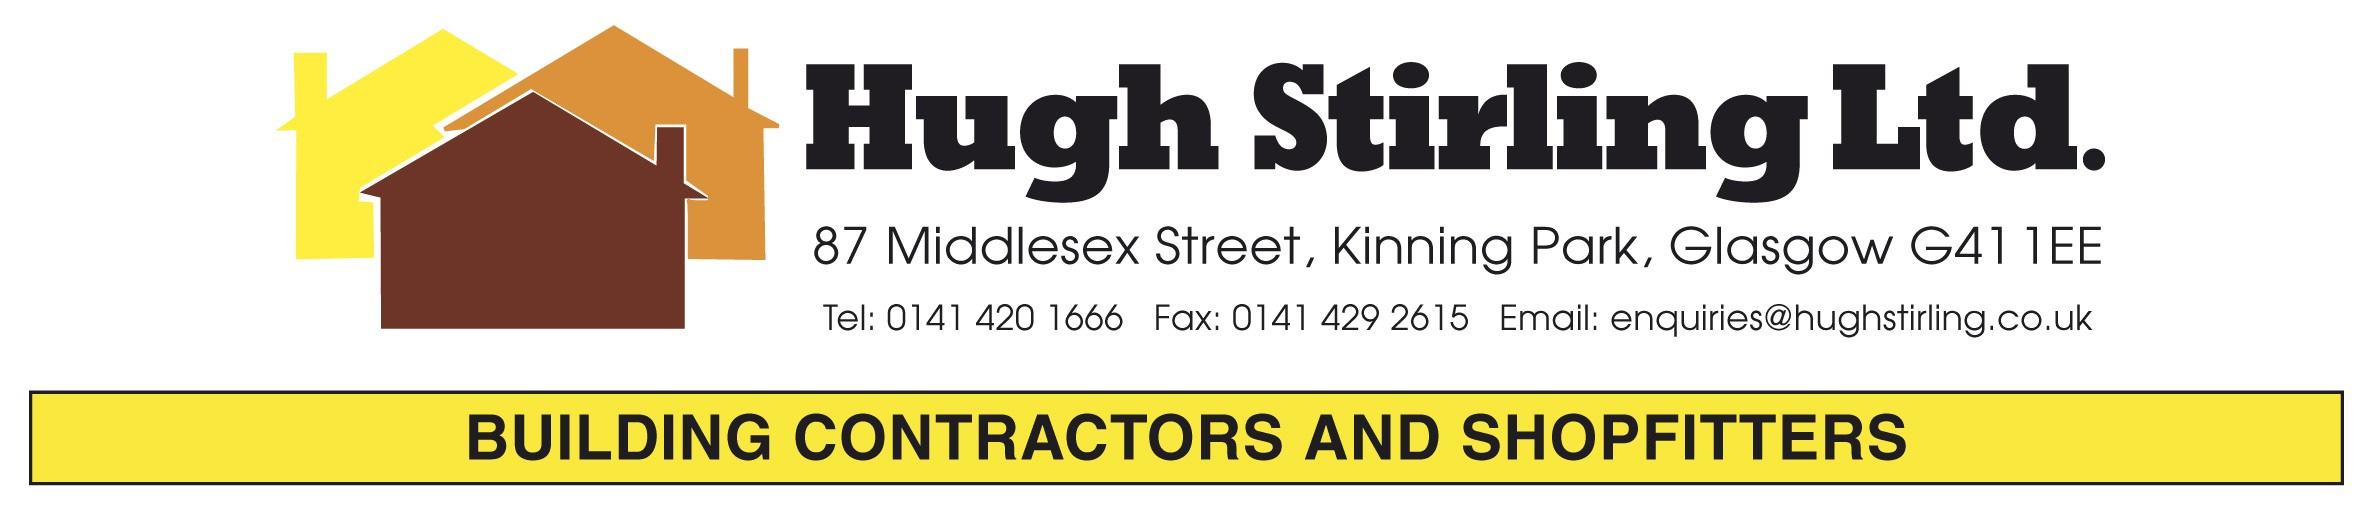 Hugh Stirling Ltd - Job Sheet